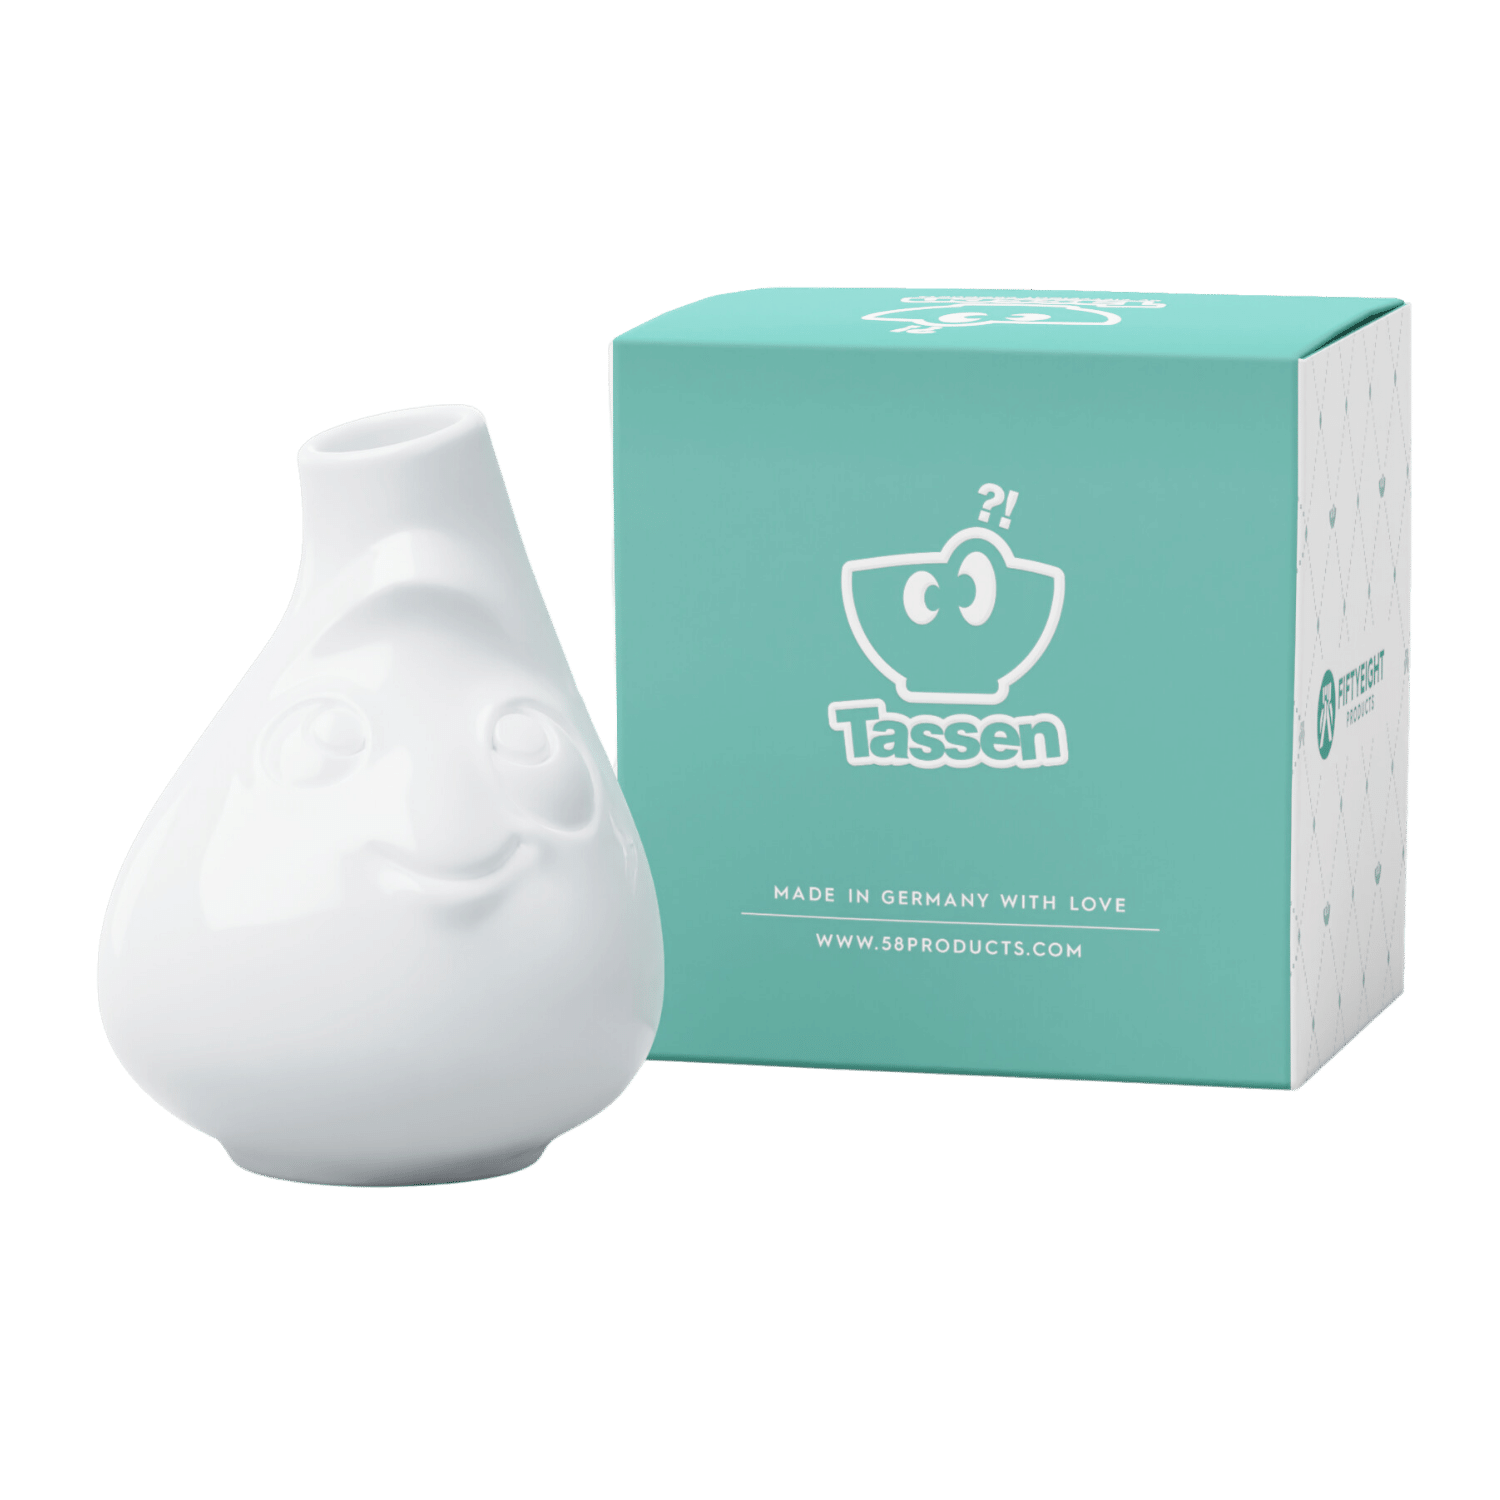 petit vase mignon cute Tassen soliflore porcelaine blanc avec carton vert